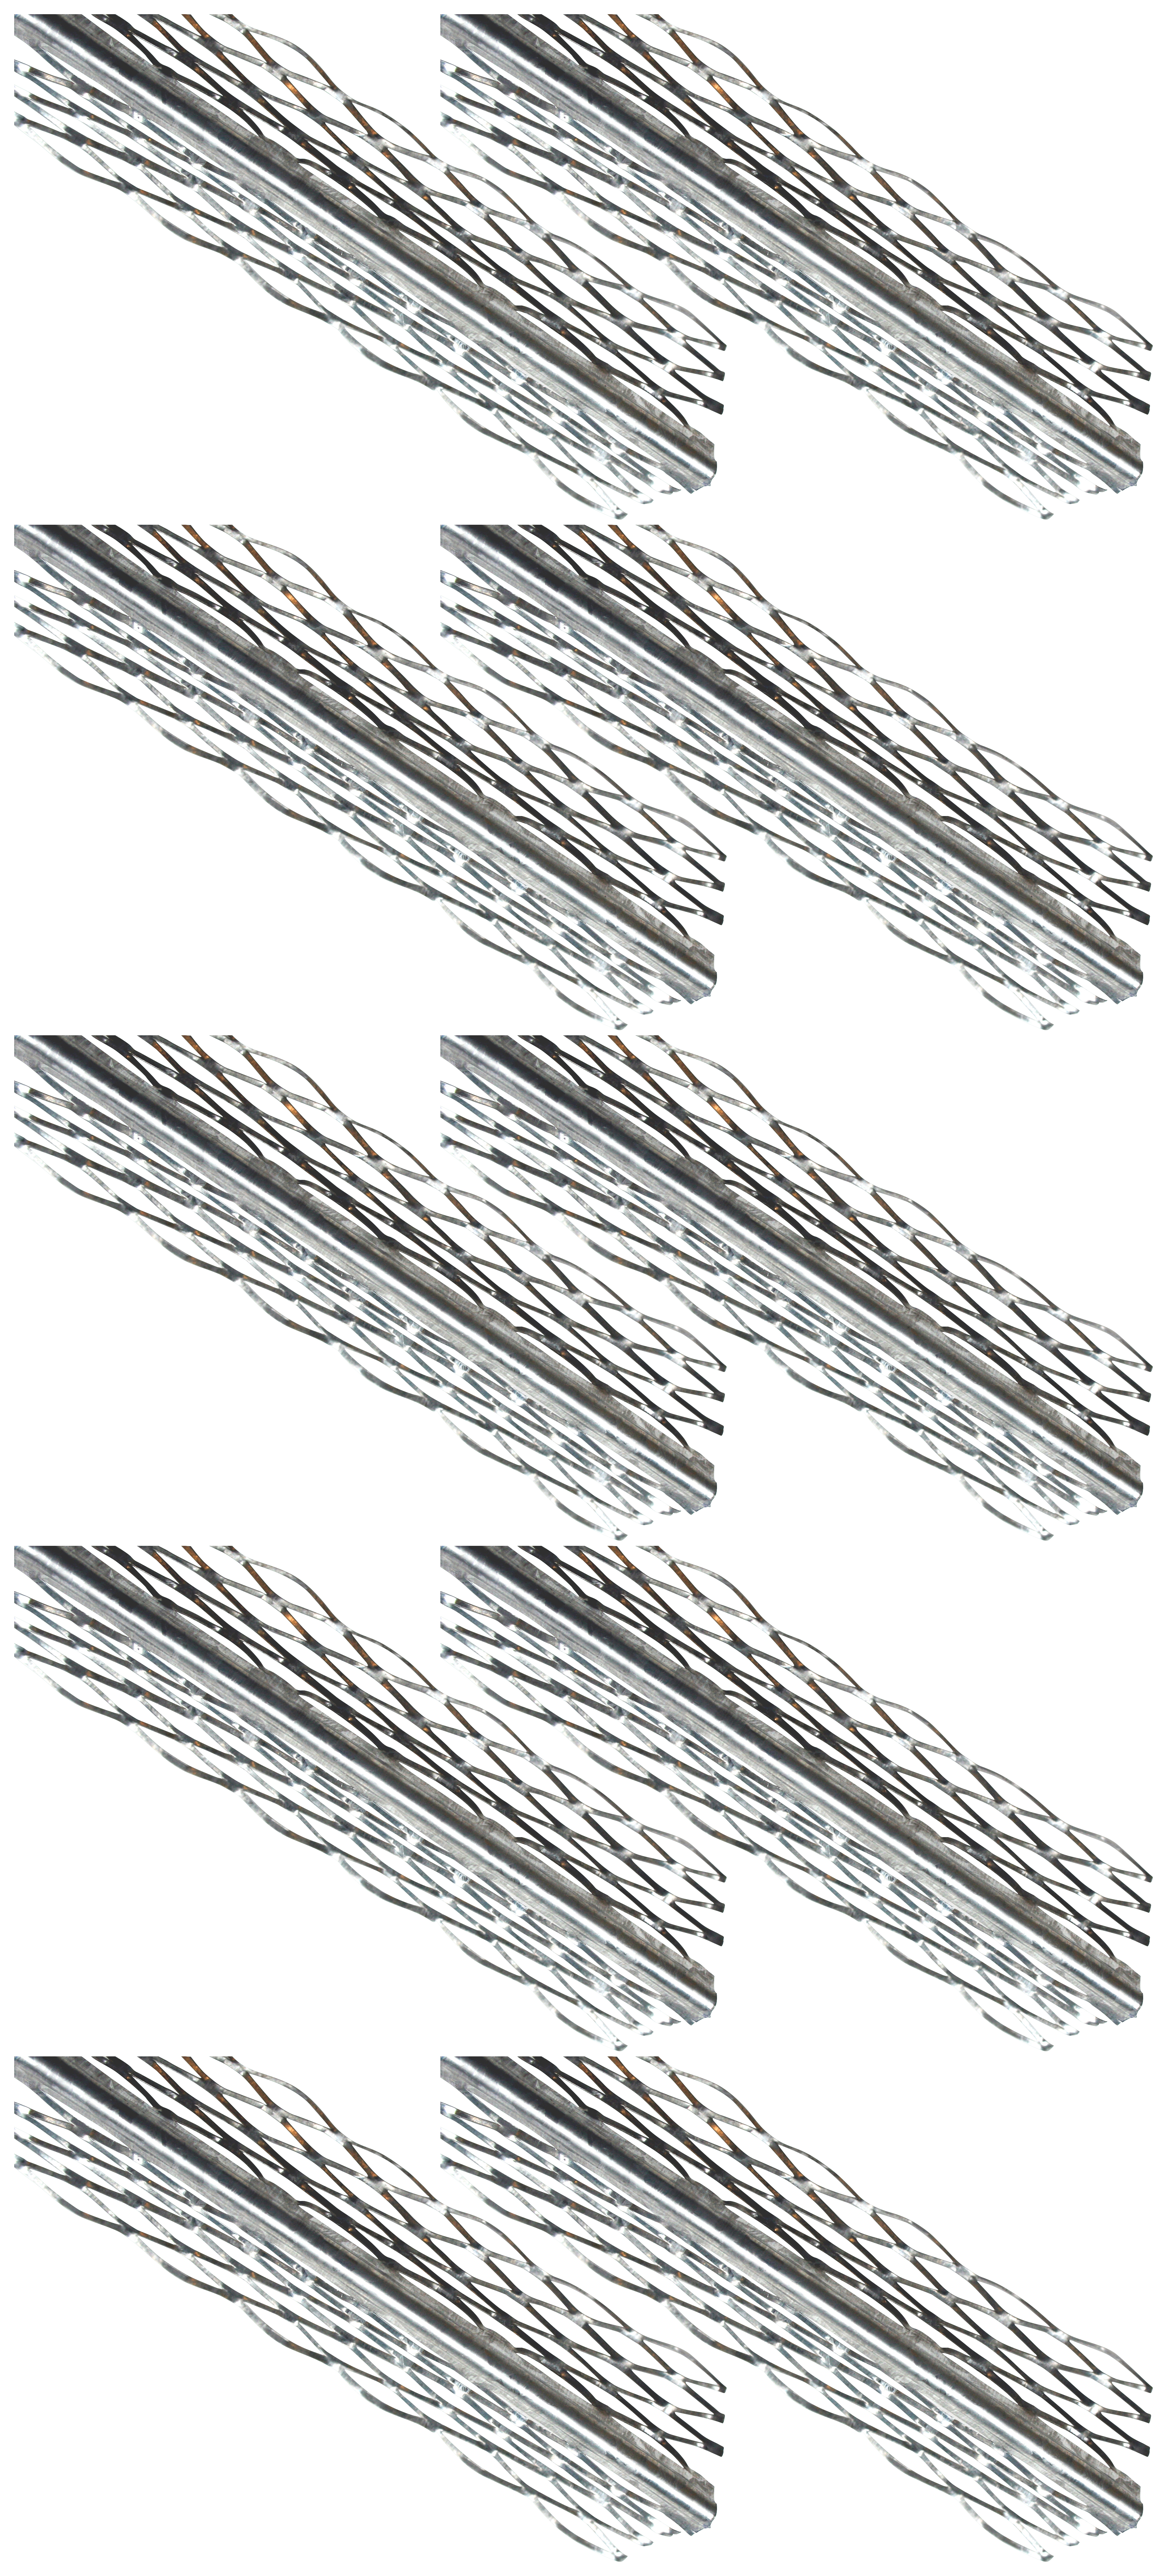 Image of Wickes Galvanised Steel Anglebead - 2.4m Pack of 10